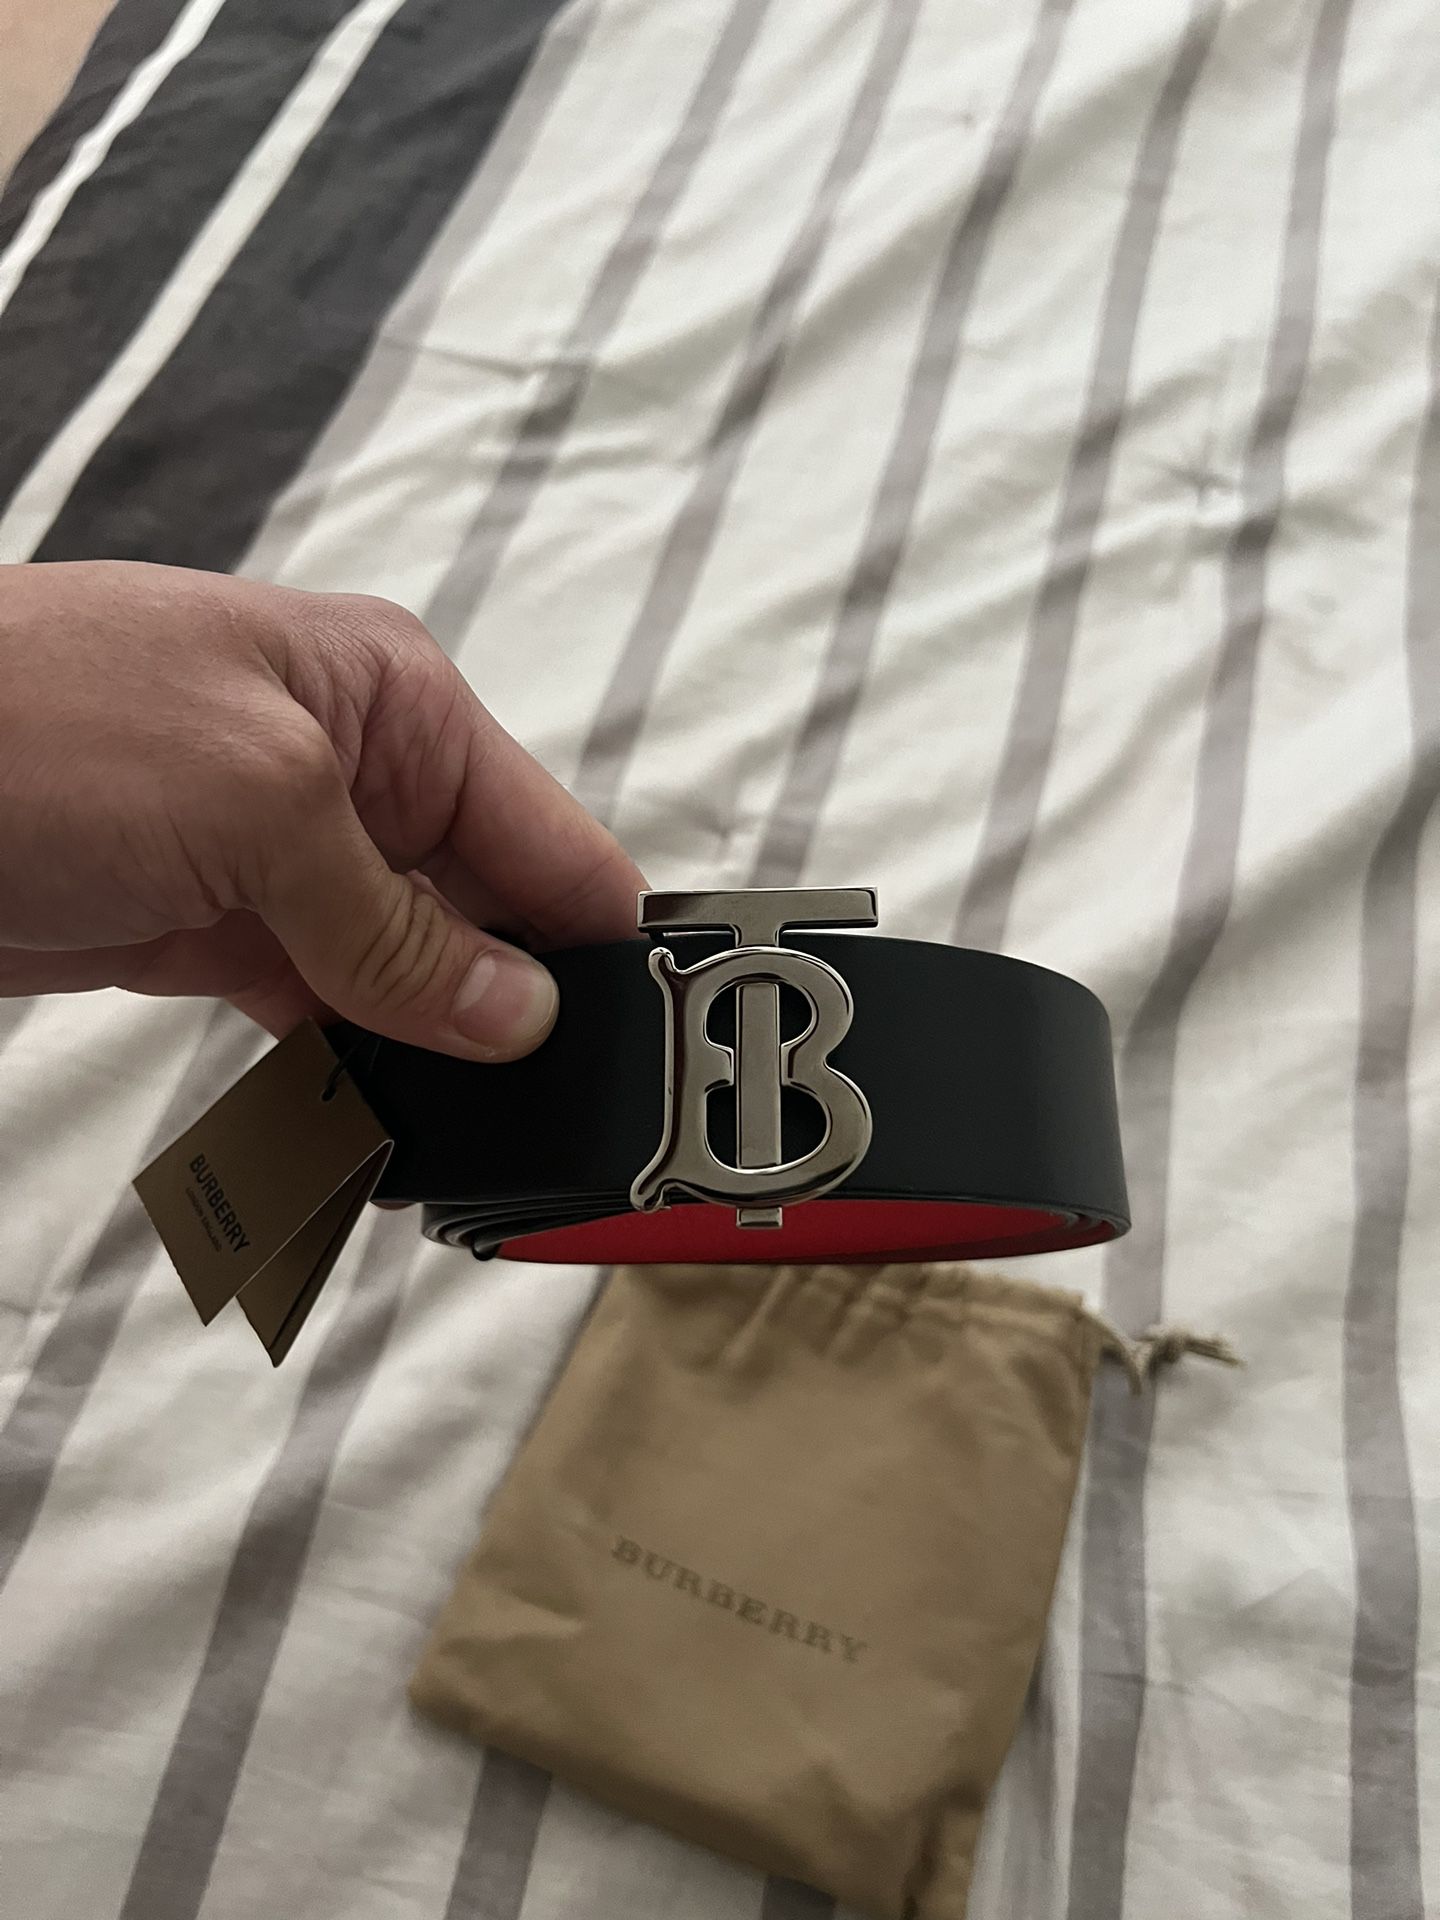 Burberry Reversible Belt for Sale in Naples, FL - OfferUp